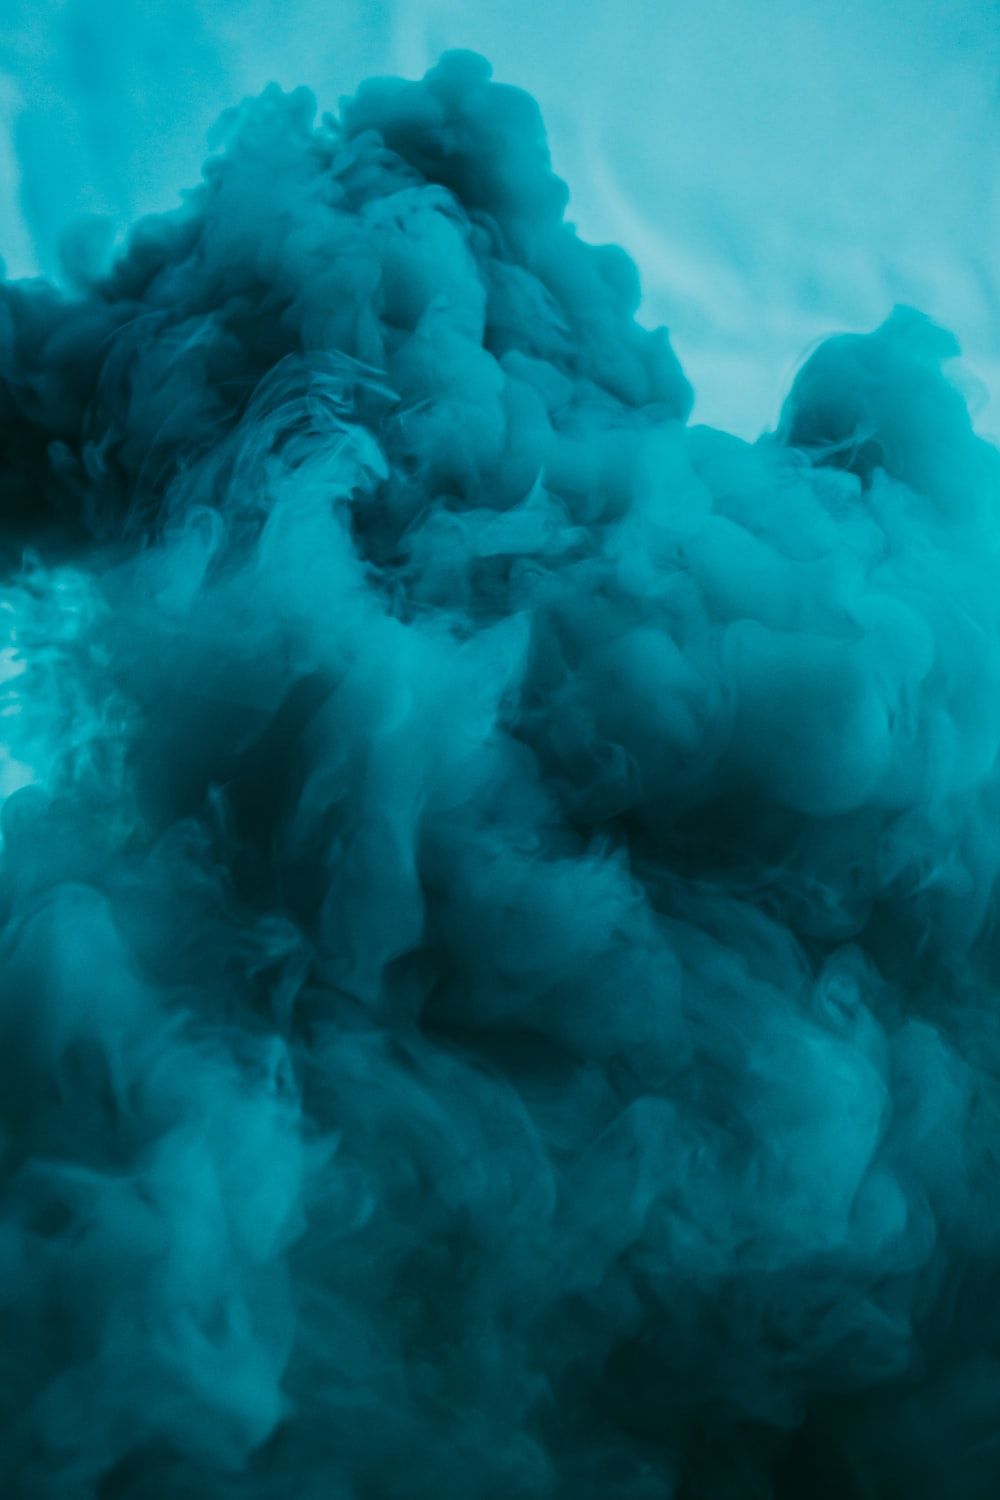 Blue Smoke Background. Download Free Image